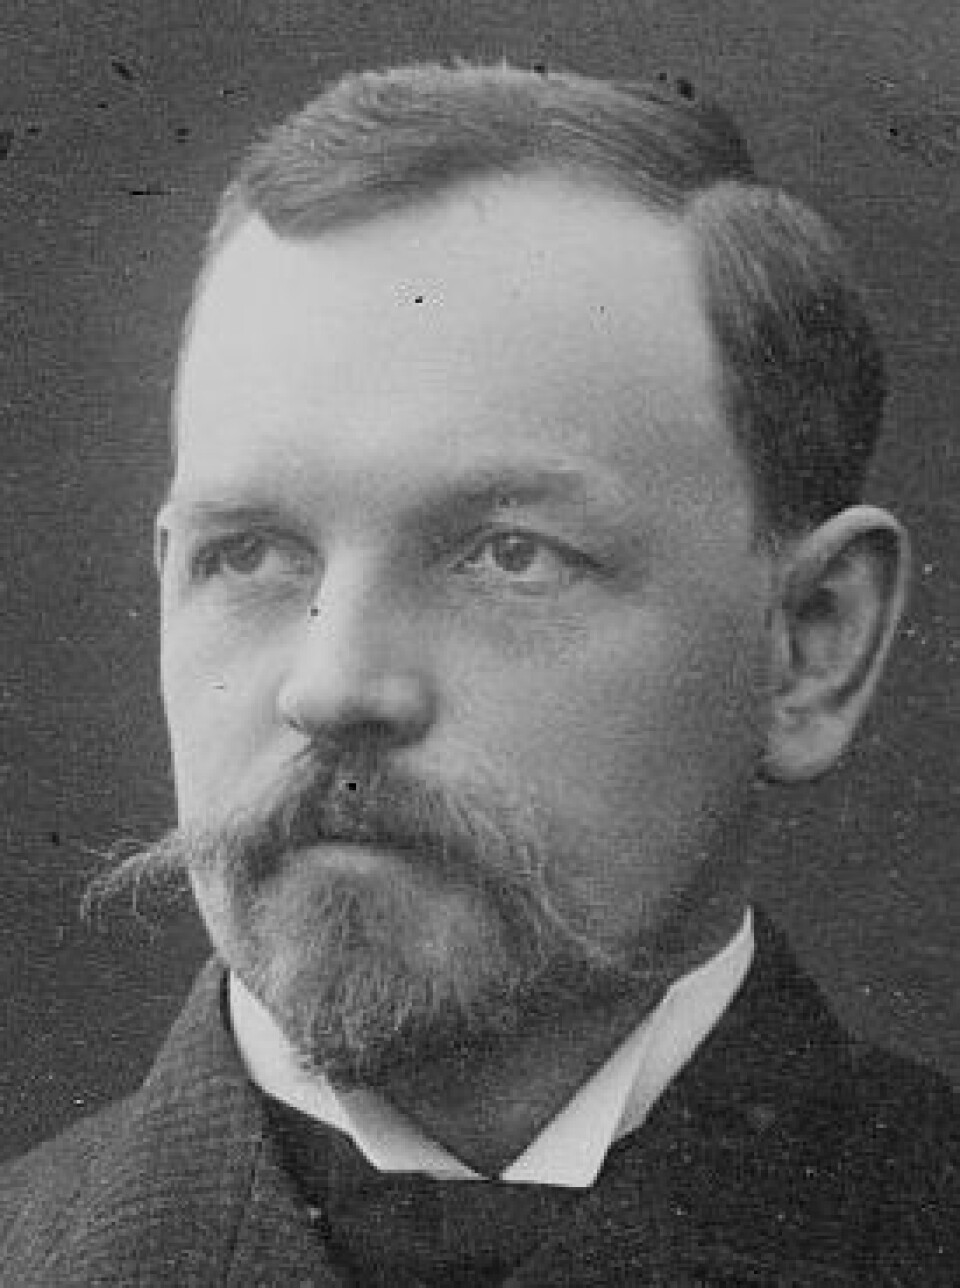 Geolog Otto Nordenskjöld (Foto: Wikimedia Creative Commons)